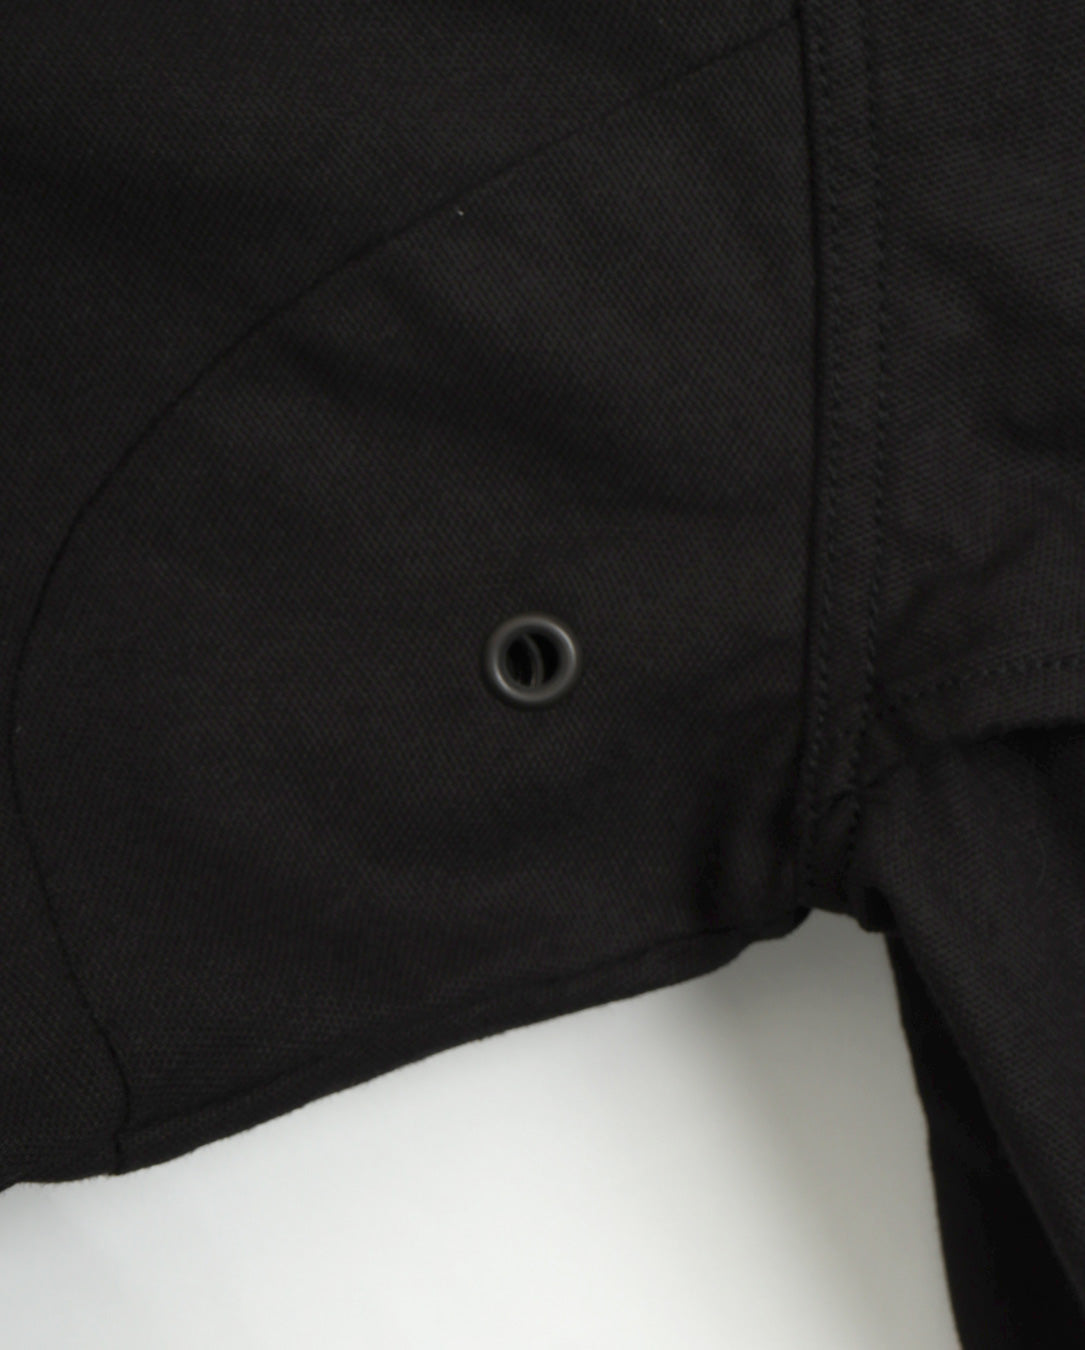 Multi Pocket Chore Jacket black